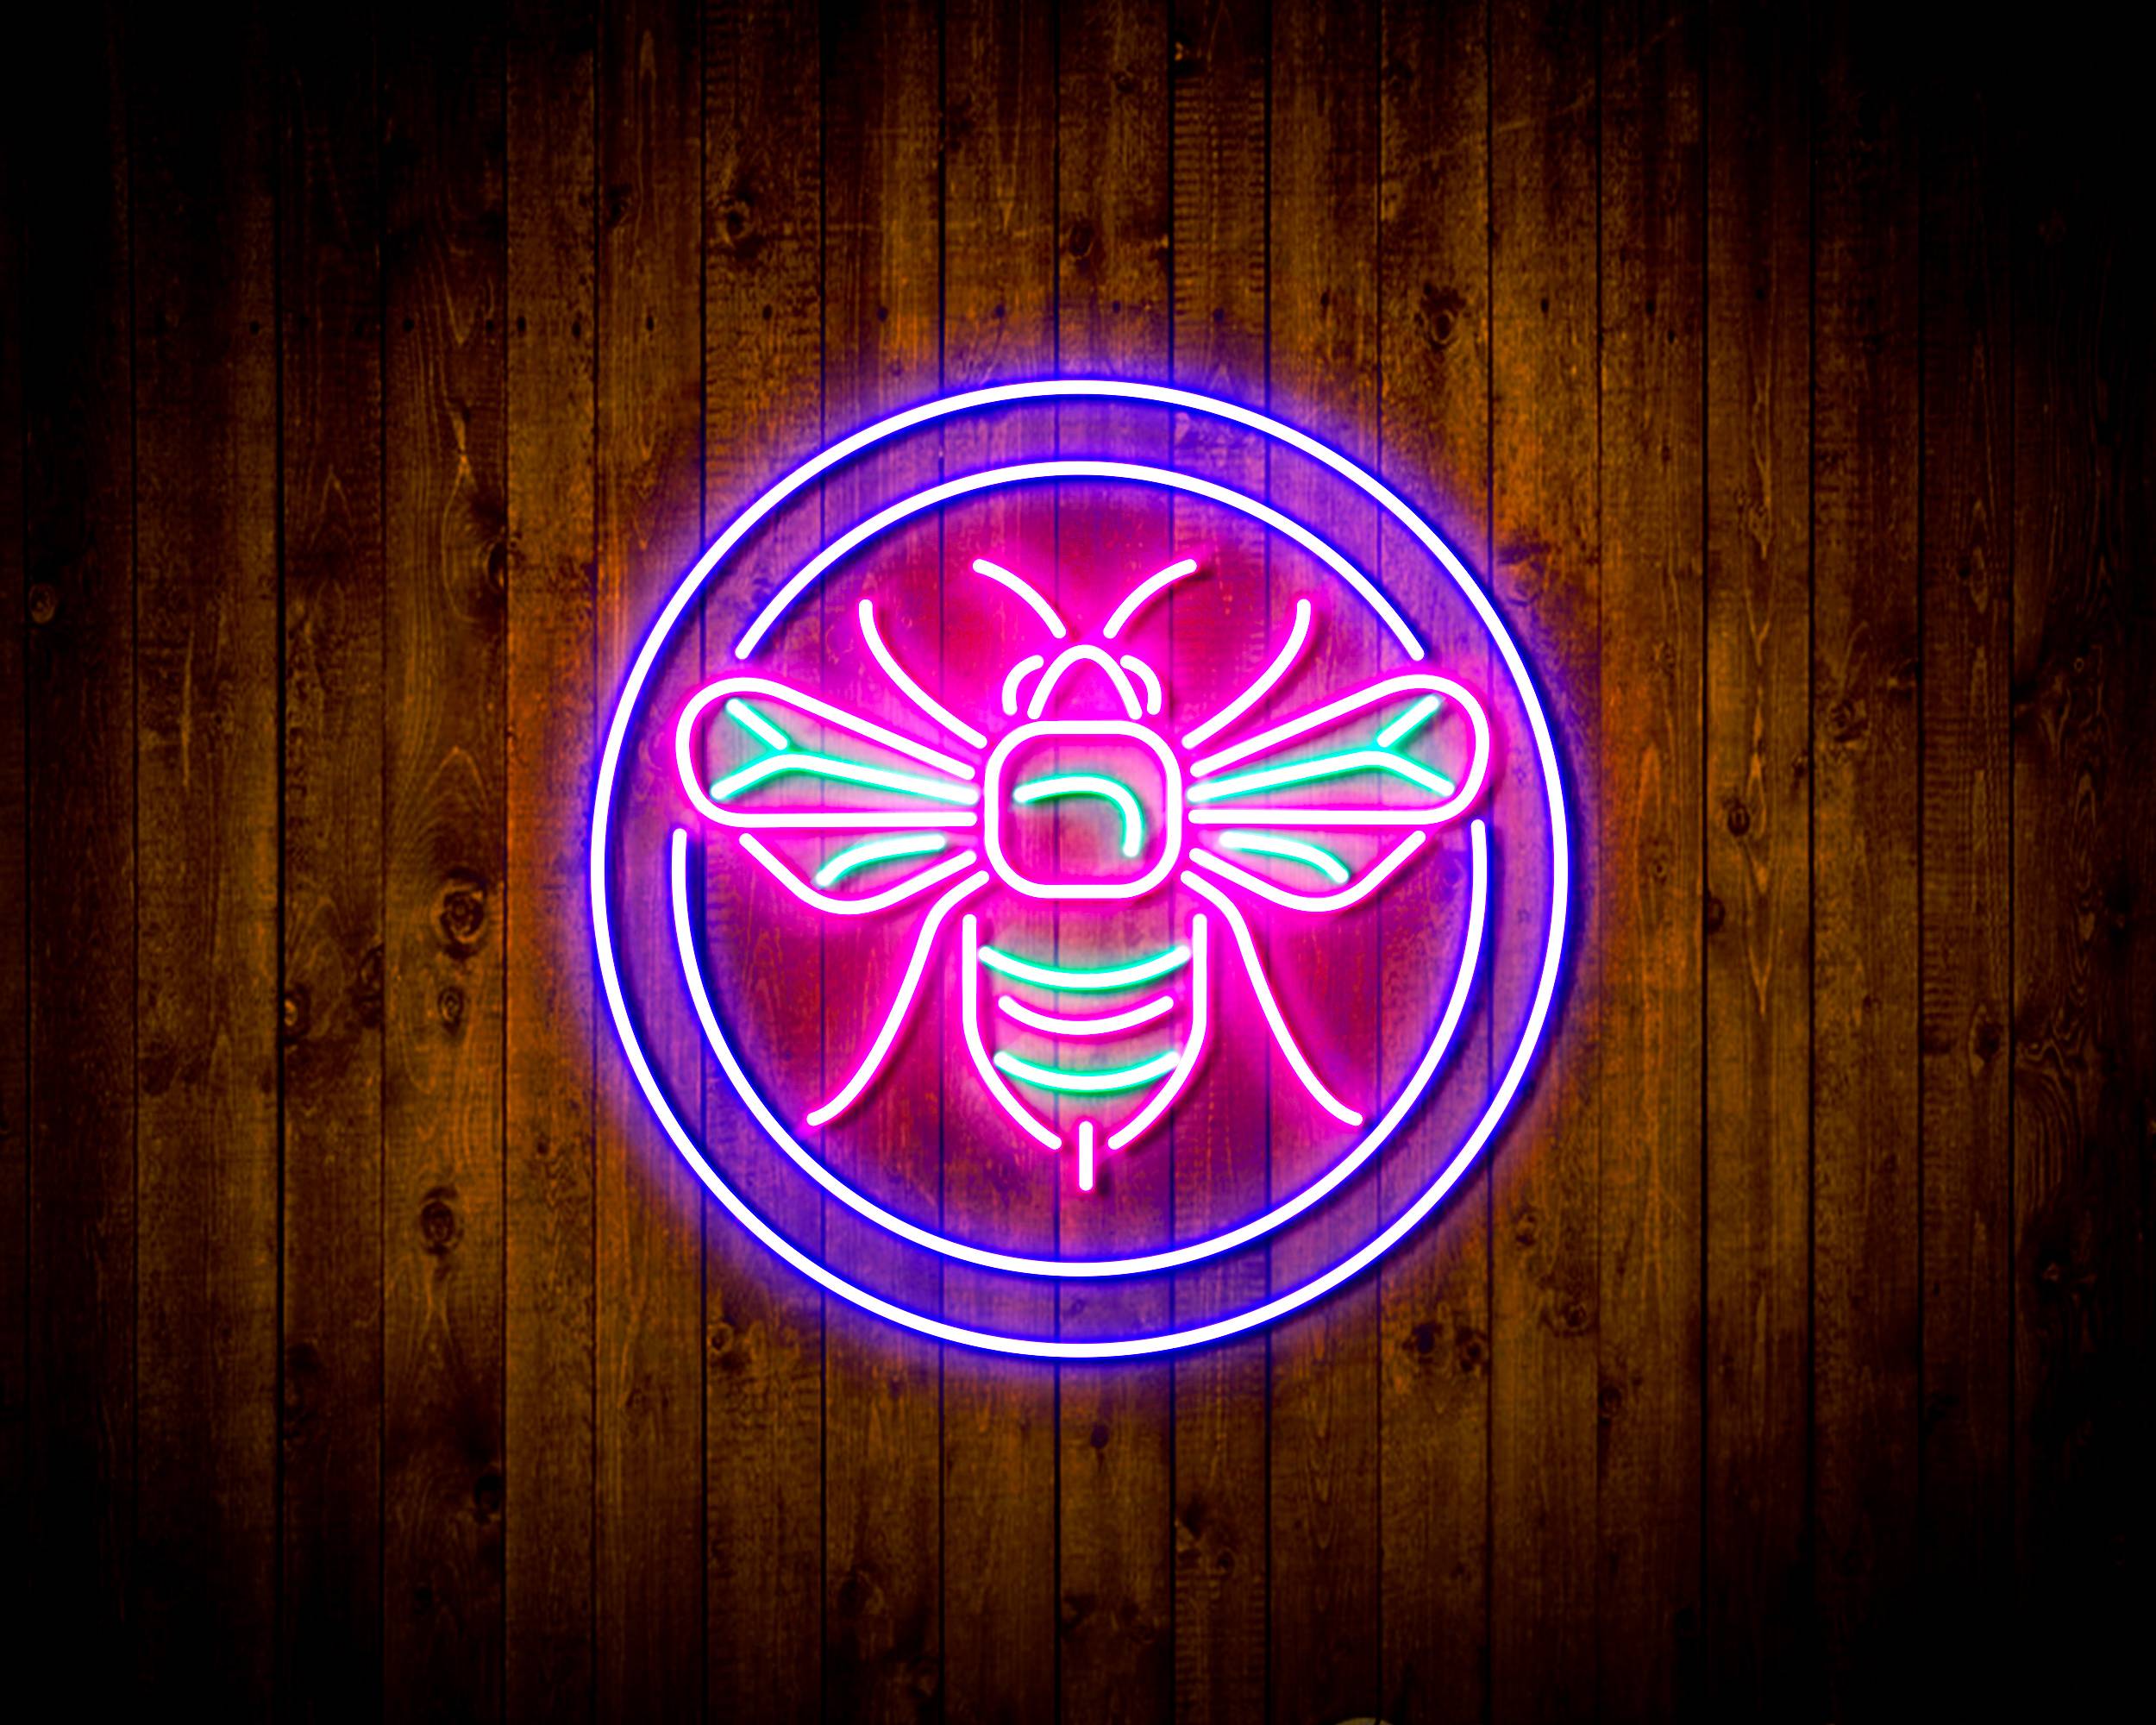 Premier League Brentford Football Club Handmade LED Neon Light Sign